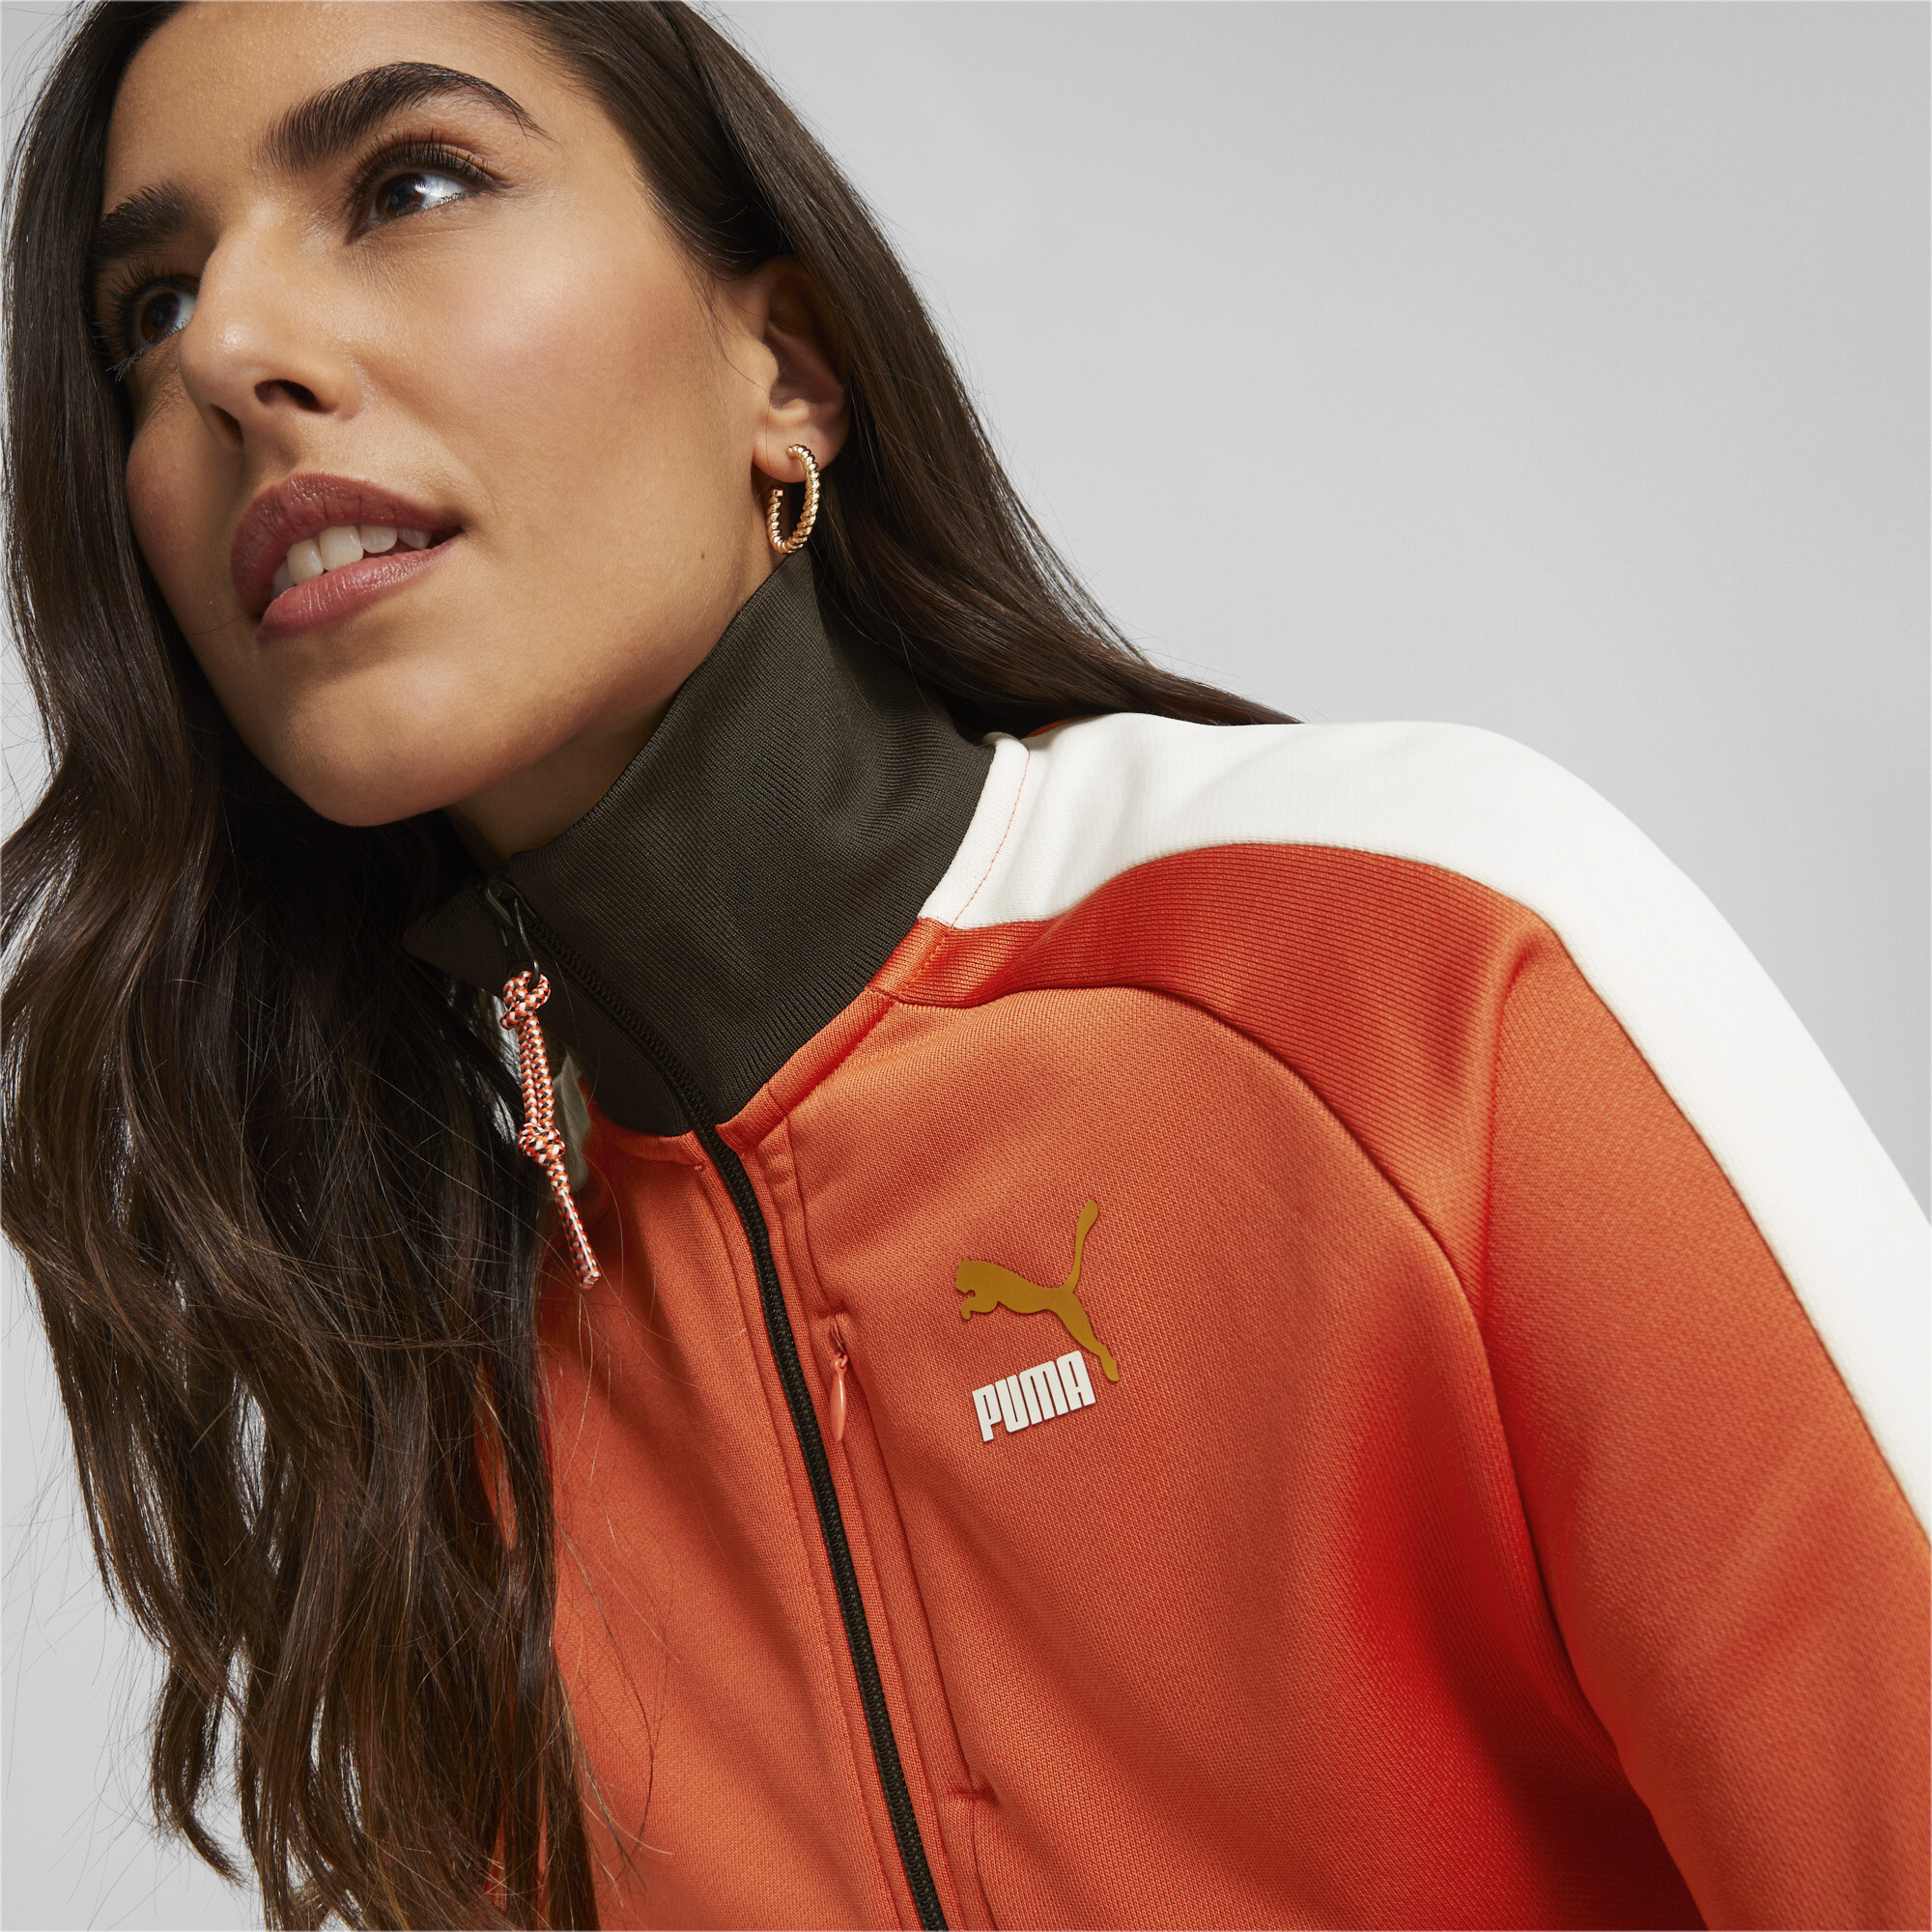 Women's PUMA T7 Track Jacket In Orange, Size XL